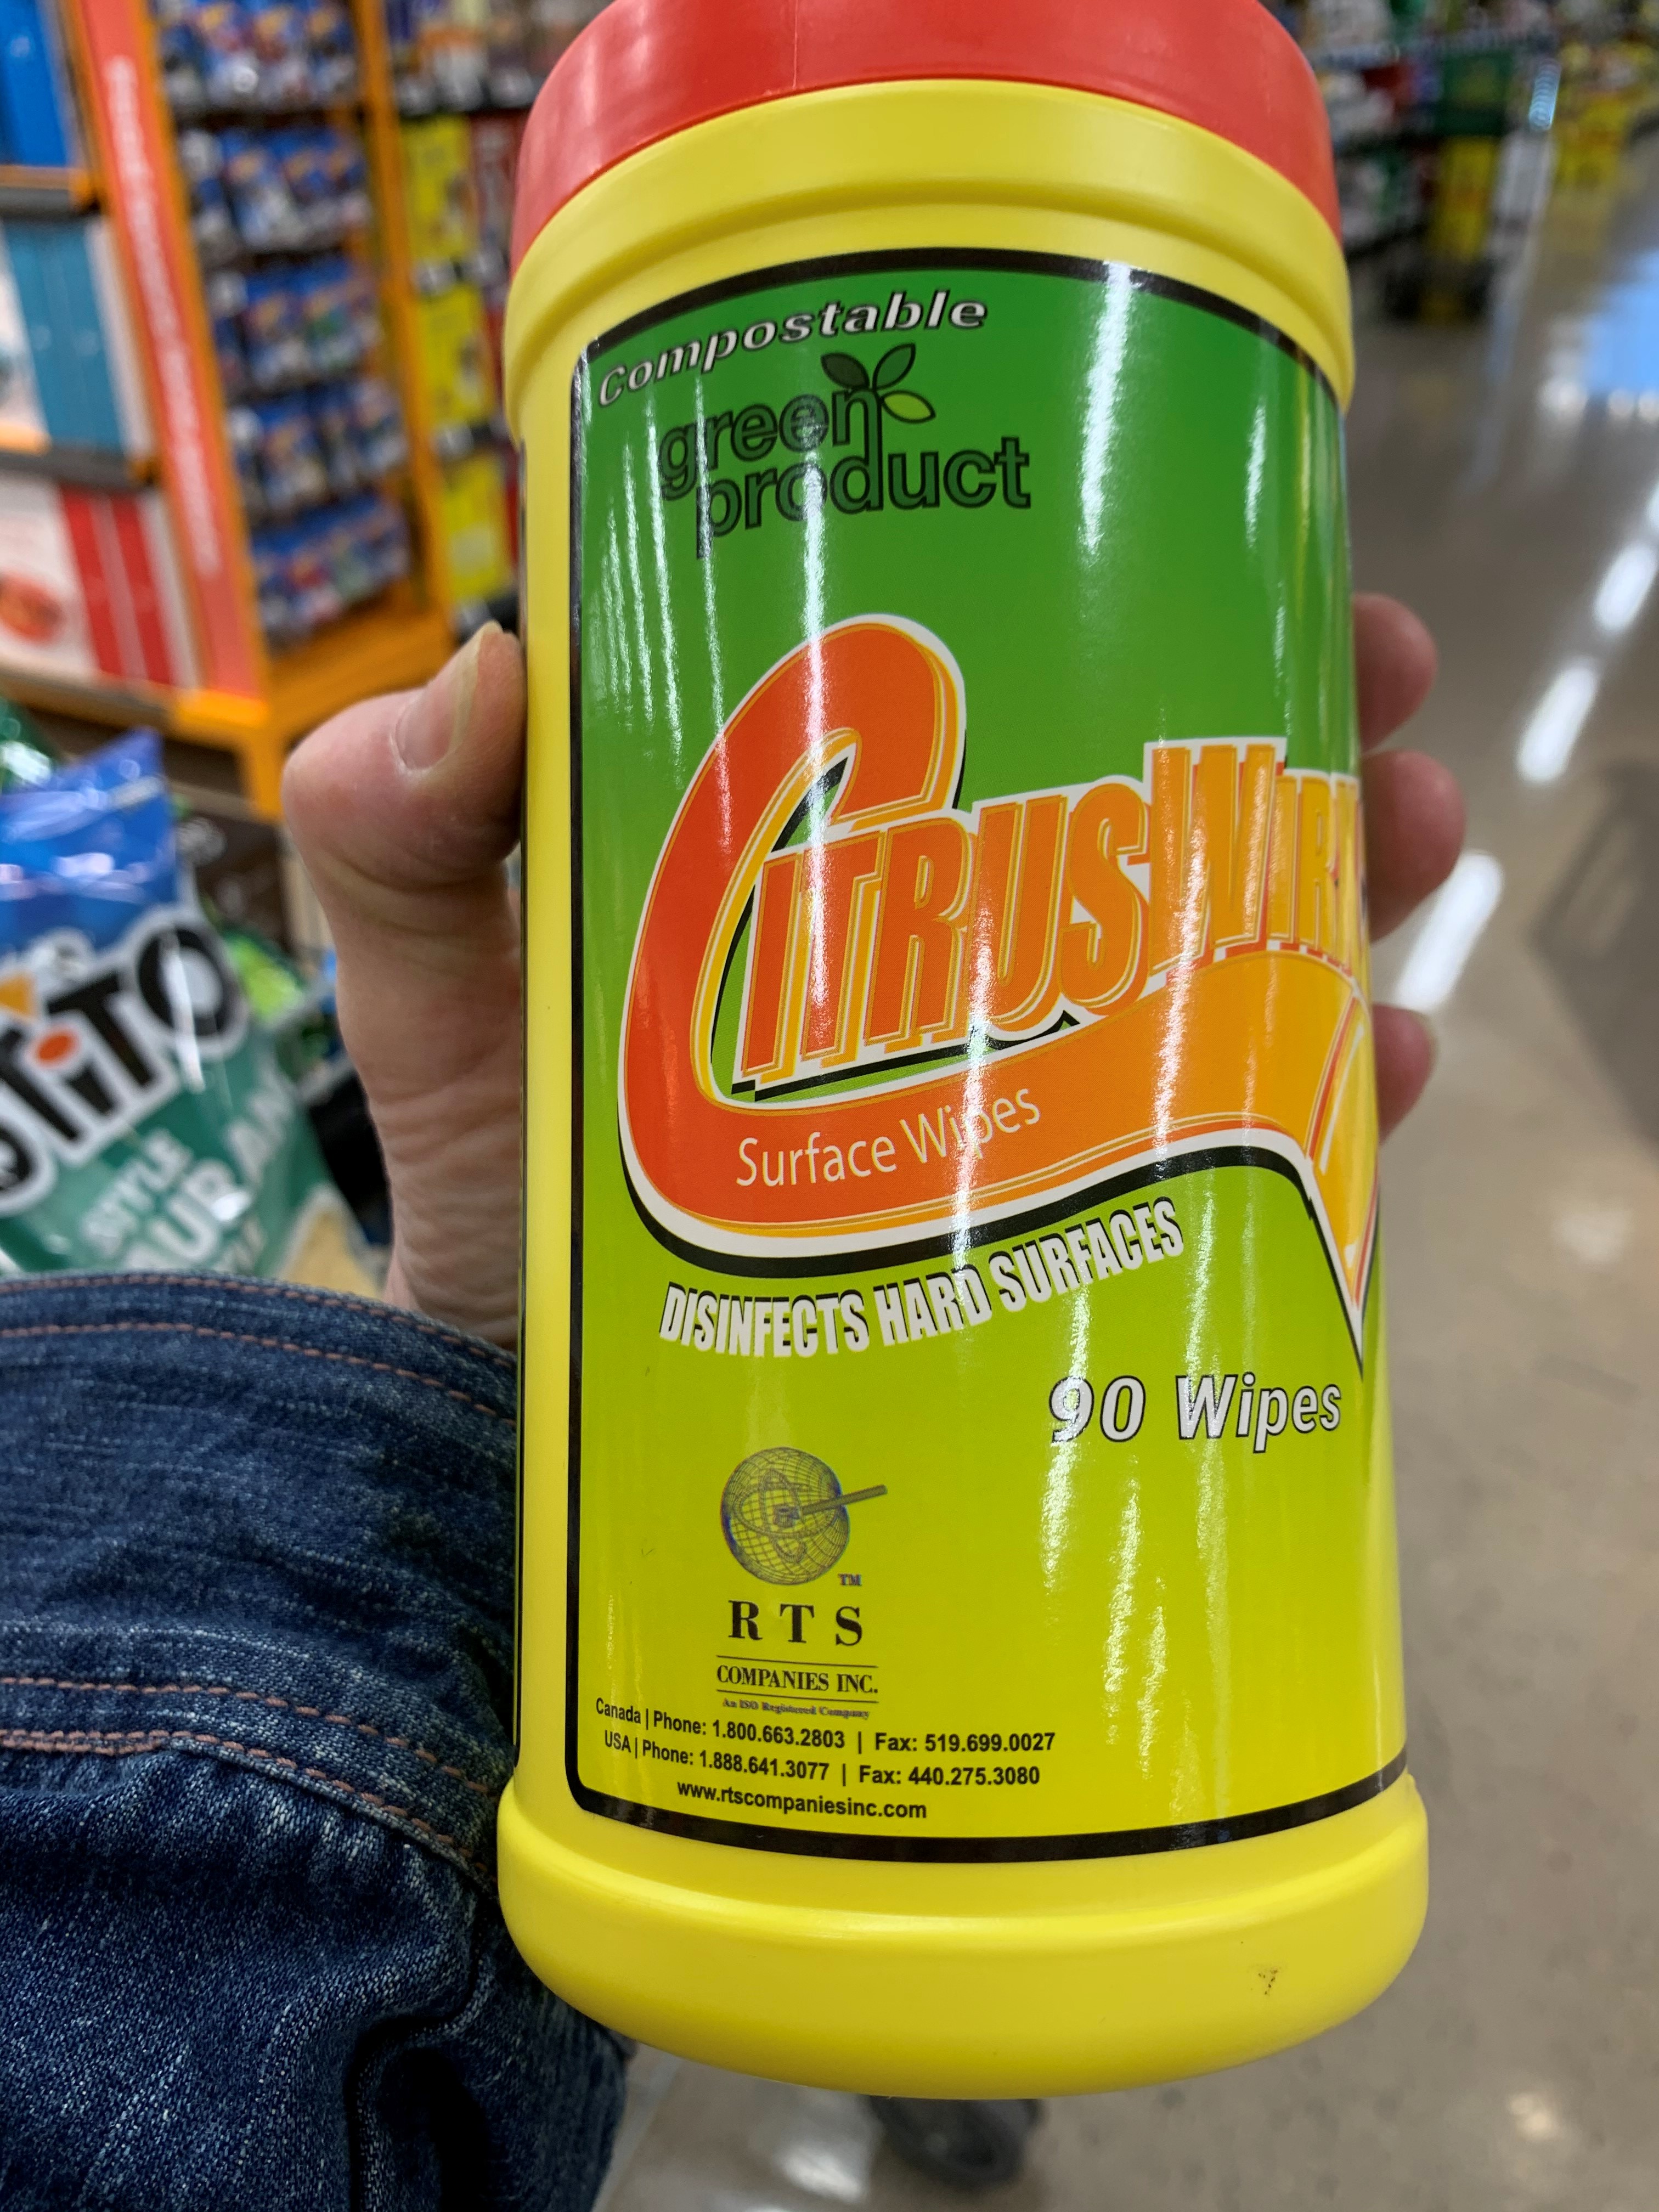 CitrusWirx Disinfectant Wipes Bucket, 460 Wipes